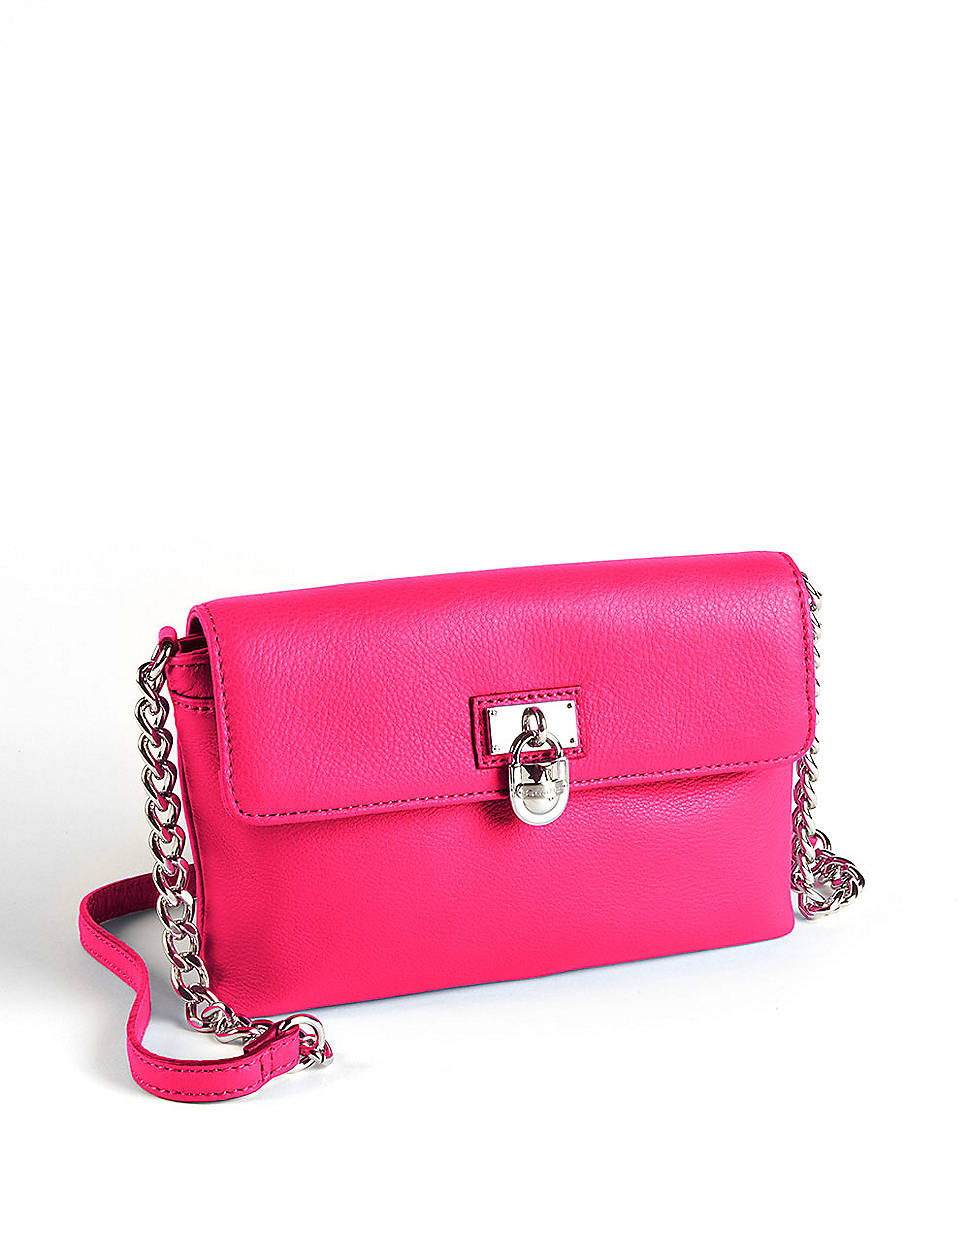 Lyst - Calvin Klein Leather Crossbody Bag in Pink